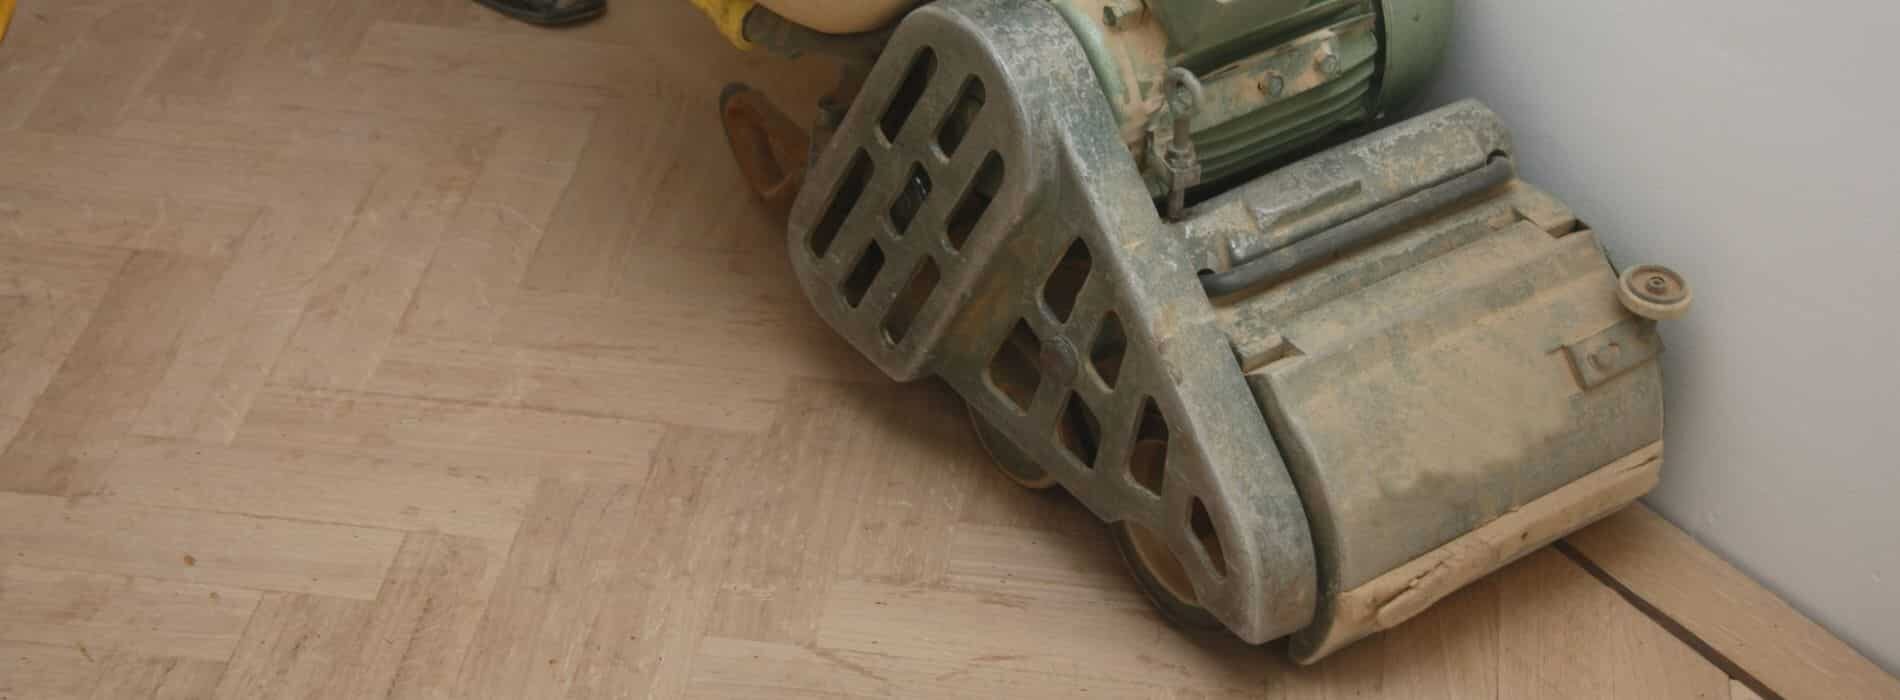 In Catford, floor sanding specialists utilise a 300mm belt sanding machine to work on a herringbone-patterned 305mm x 75mm solid pine floor.